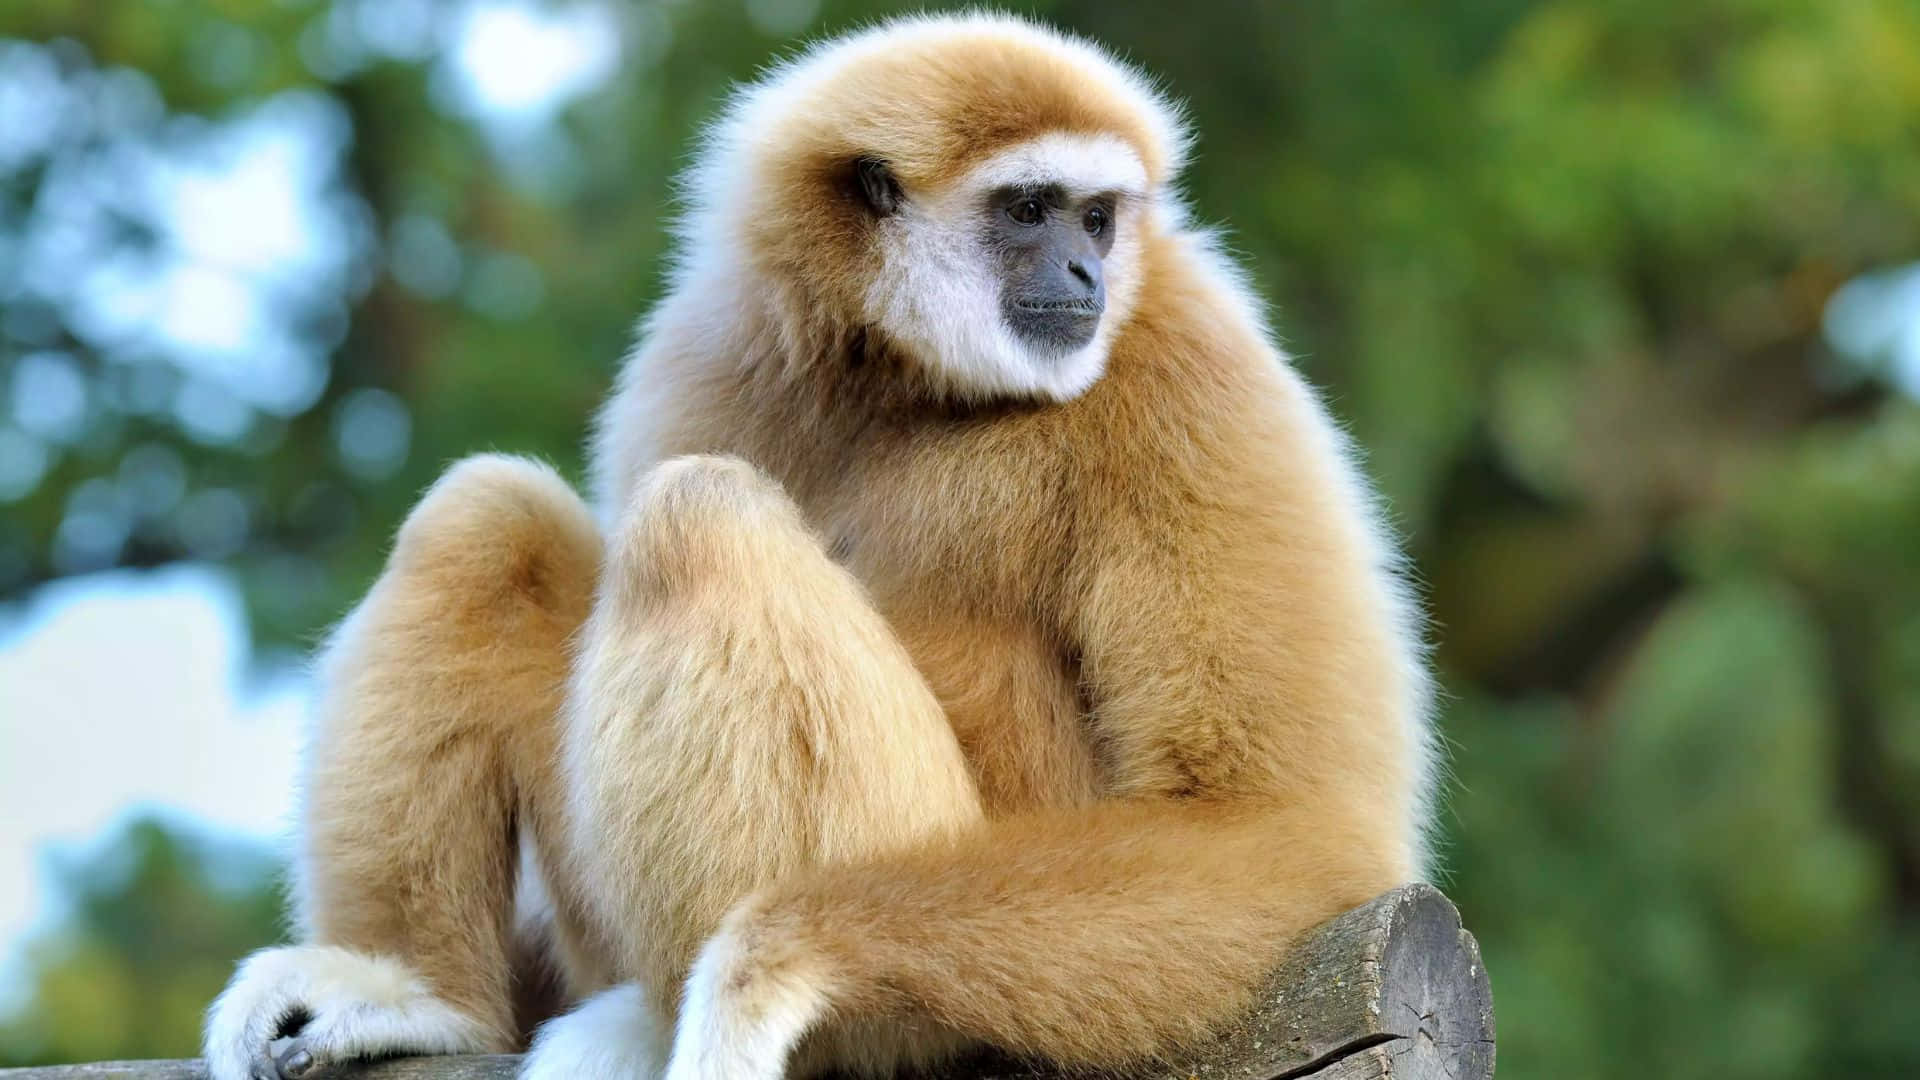 A 1080p Gibbon Sitting on a Tree Branch